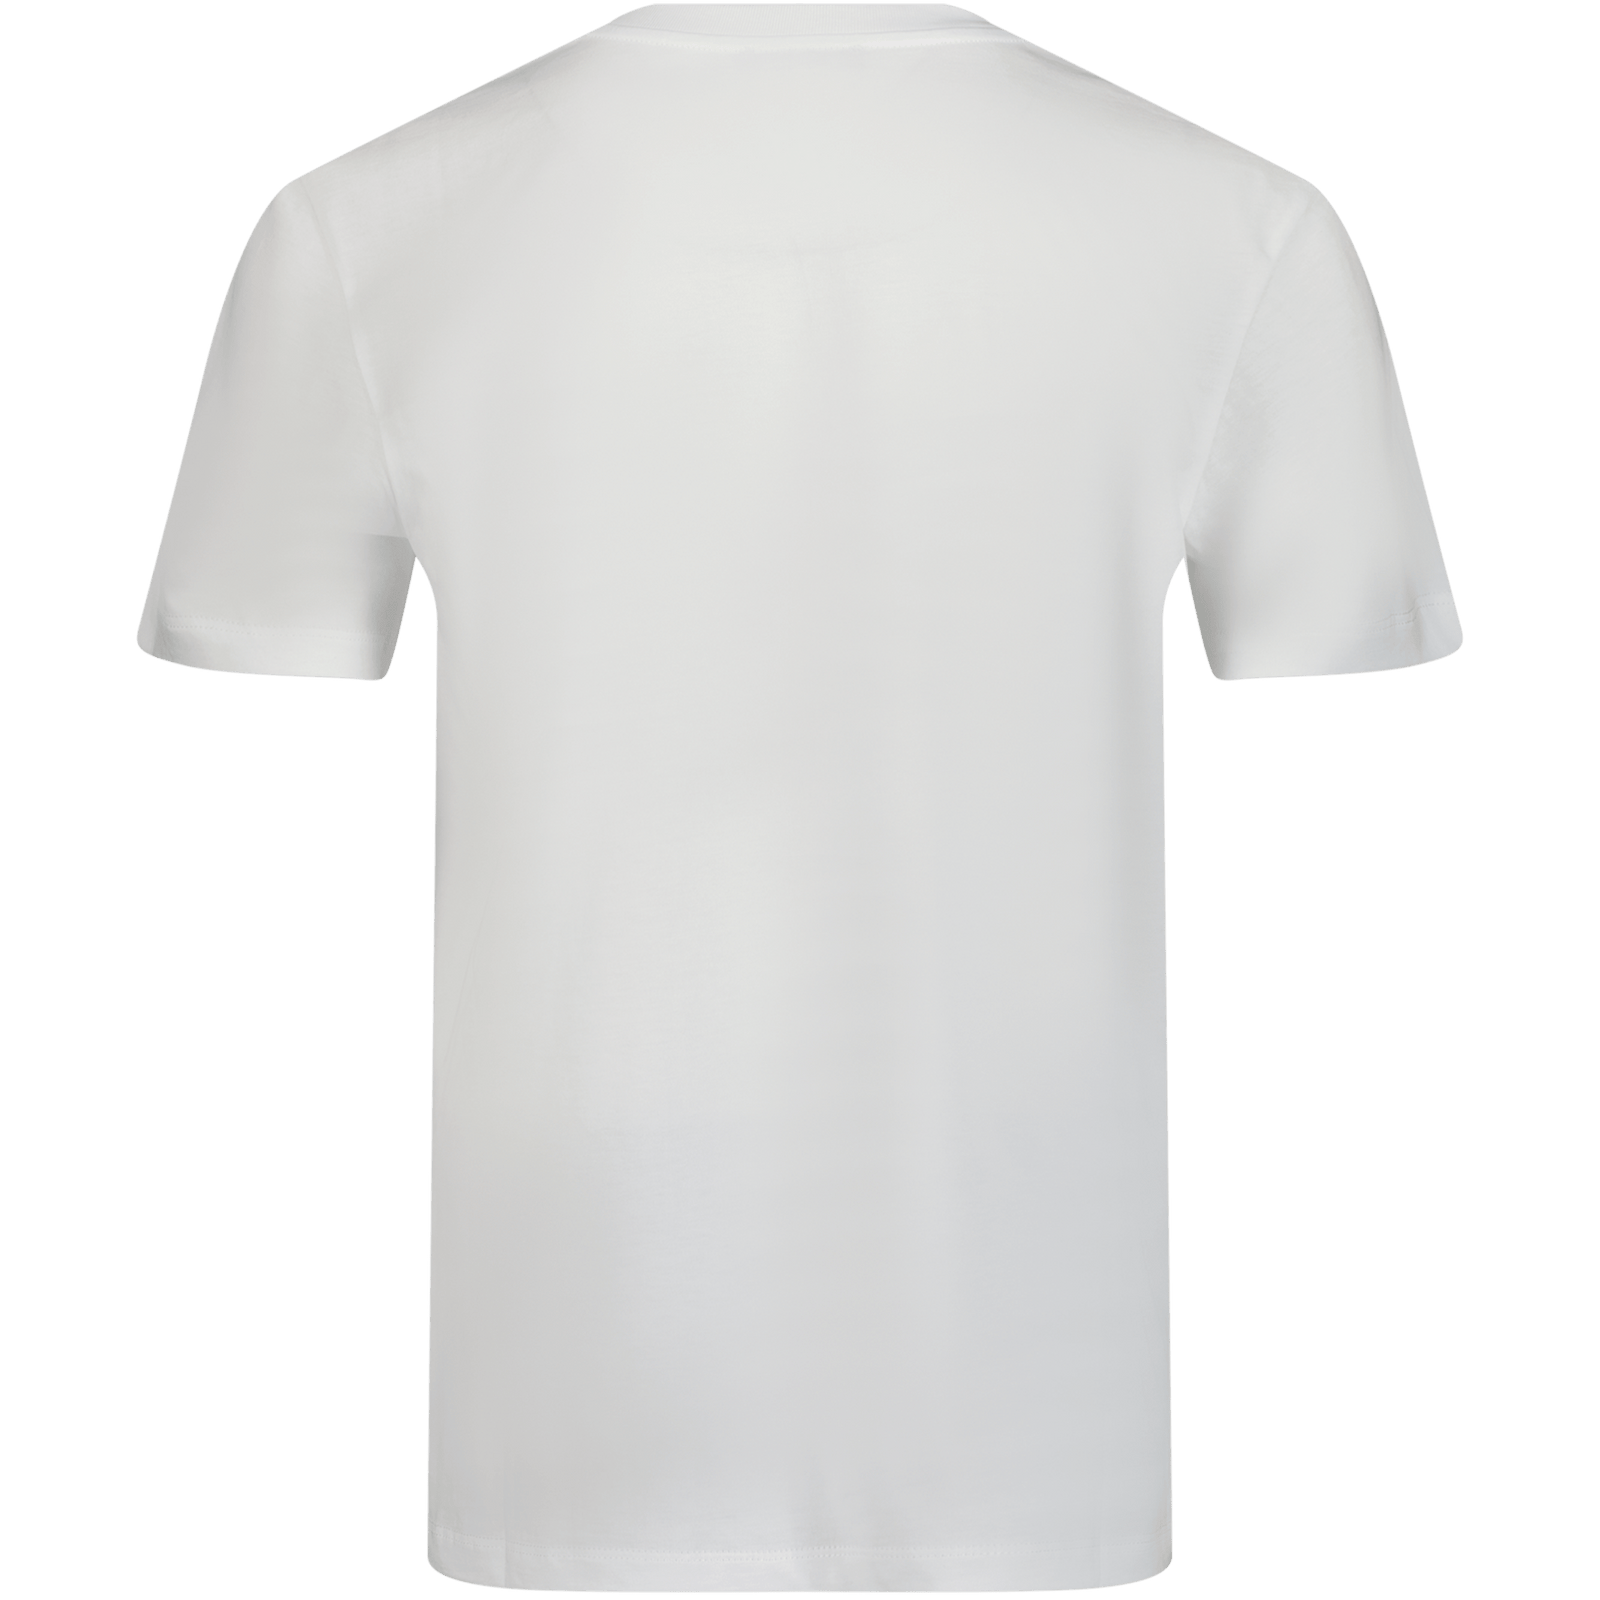 Balmain Kinder Unisex T-Shirt Wit 4Y